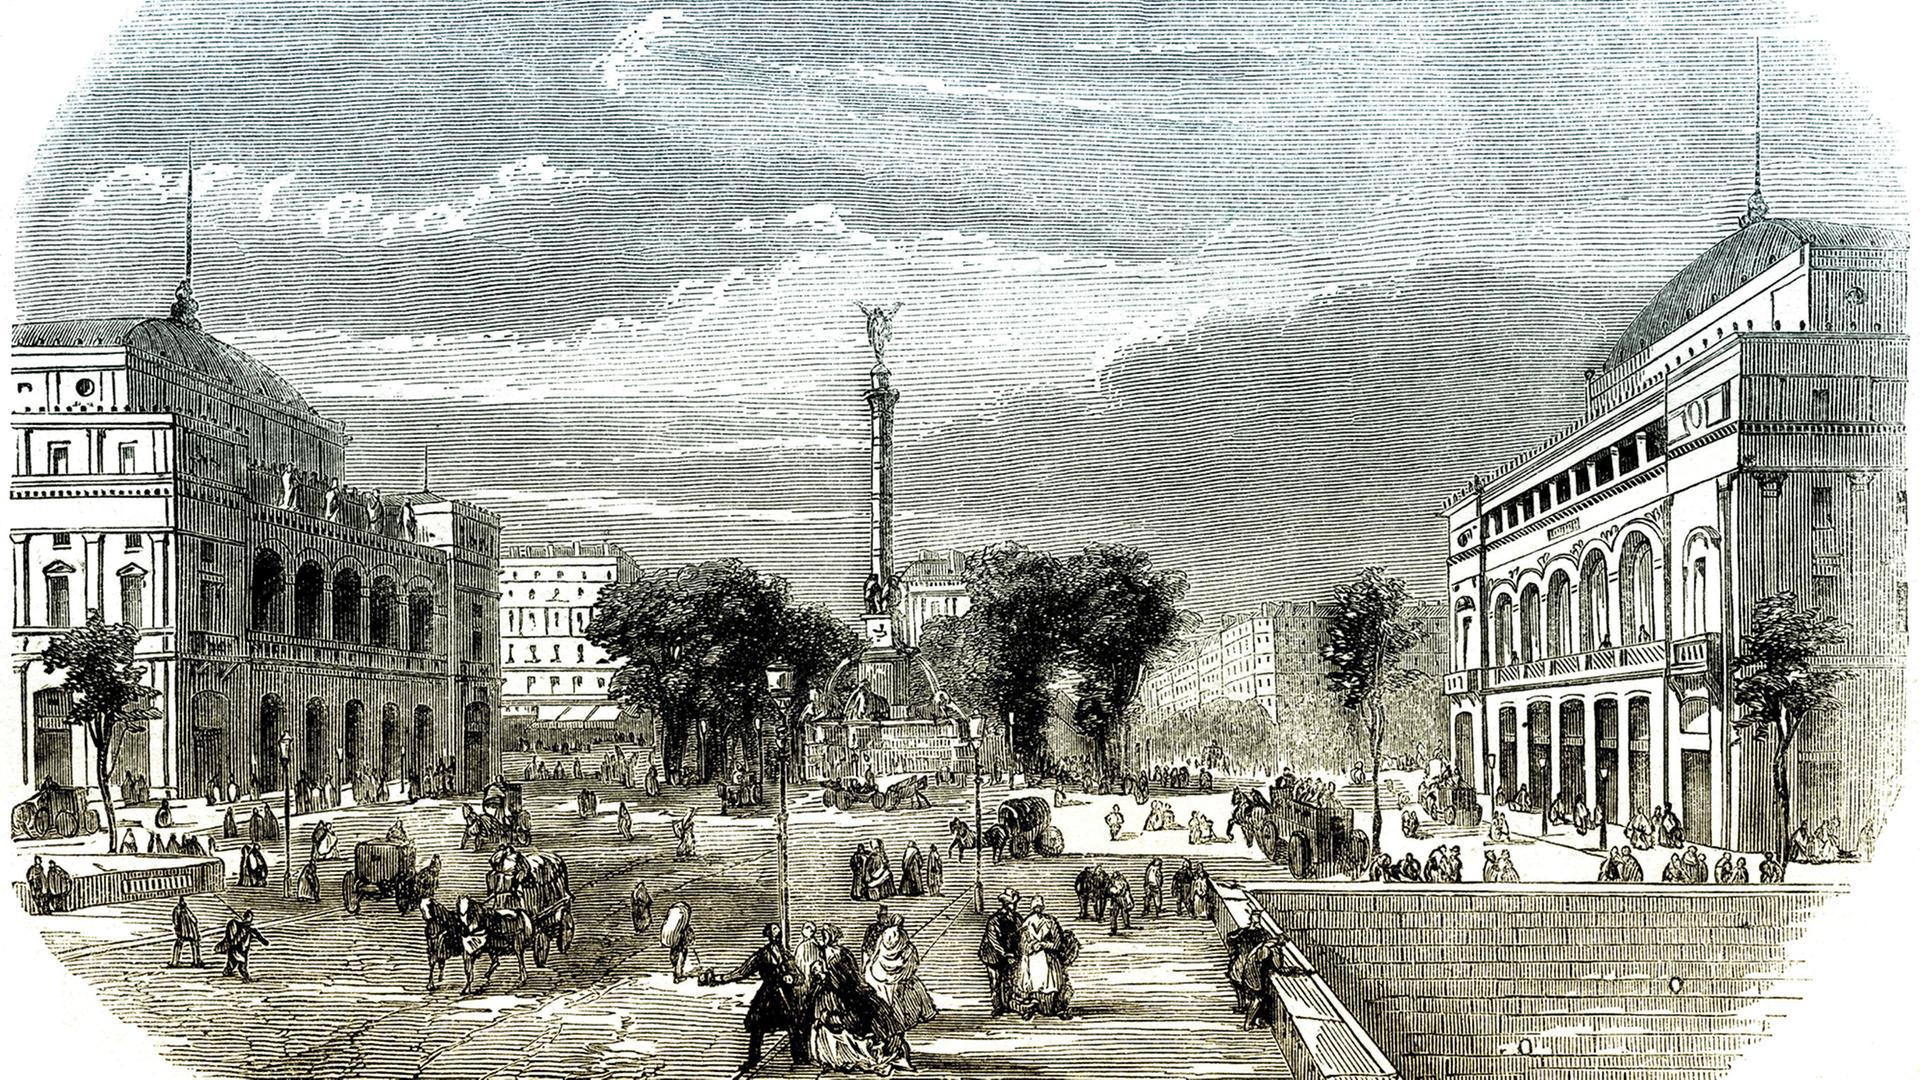 Historische Zeichnung: Paris, Place du Châtelet, die Siegessäule du Palmier, das Théâtre du Châtelet und Théâtre de la Ville von Gabriel Davioud, Frankreich, um 1860.